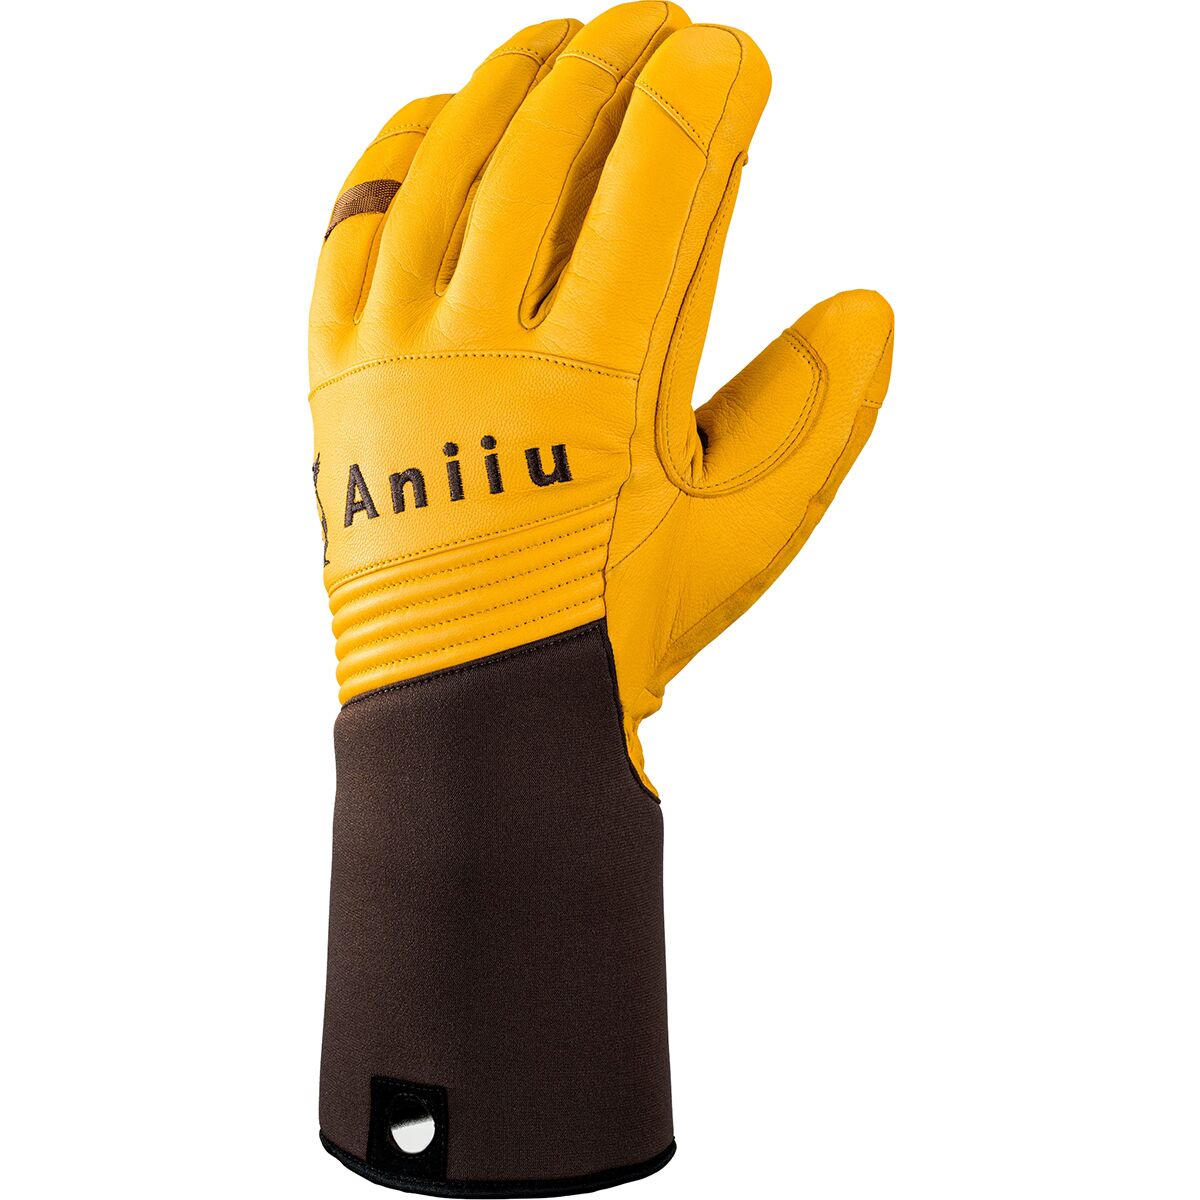 Aniiu Tyree Neo Cuff Glove - Men's Natural